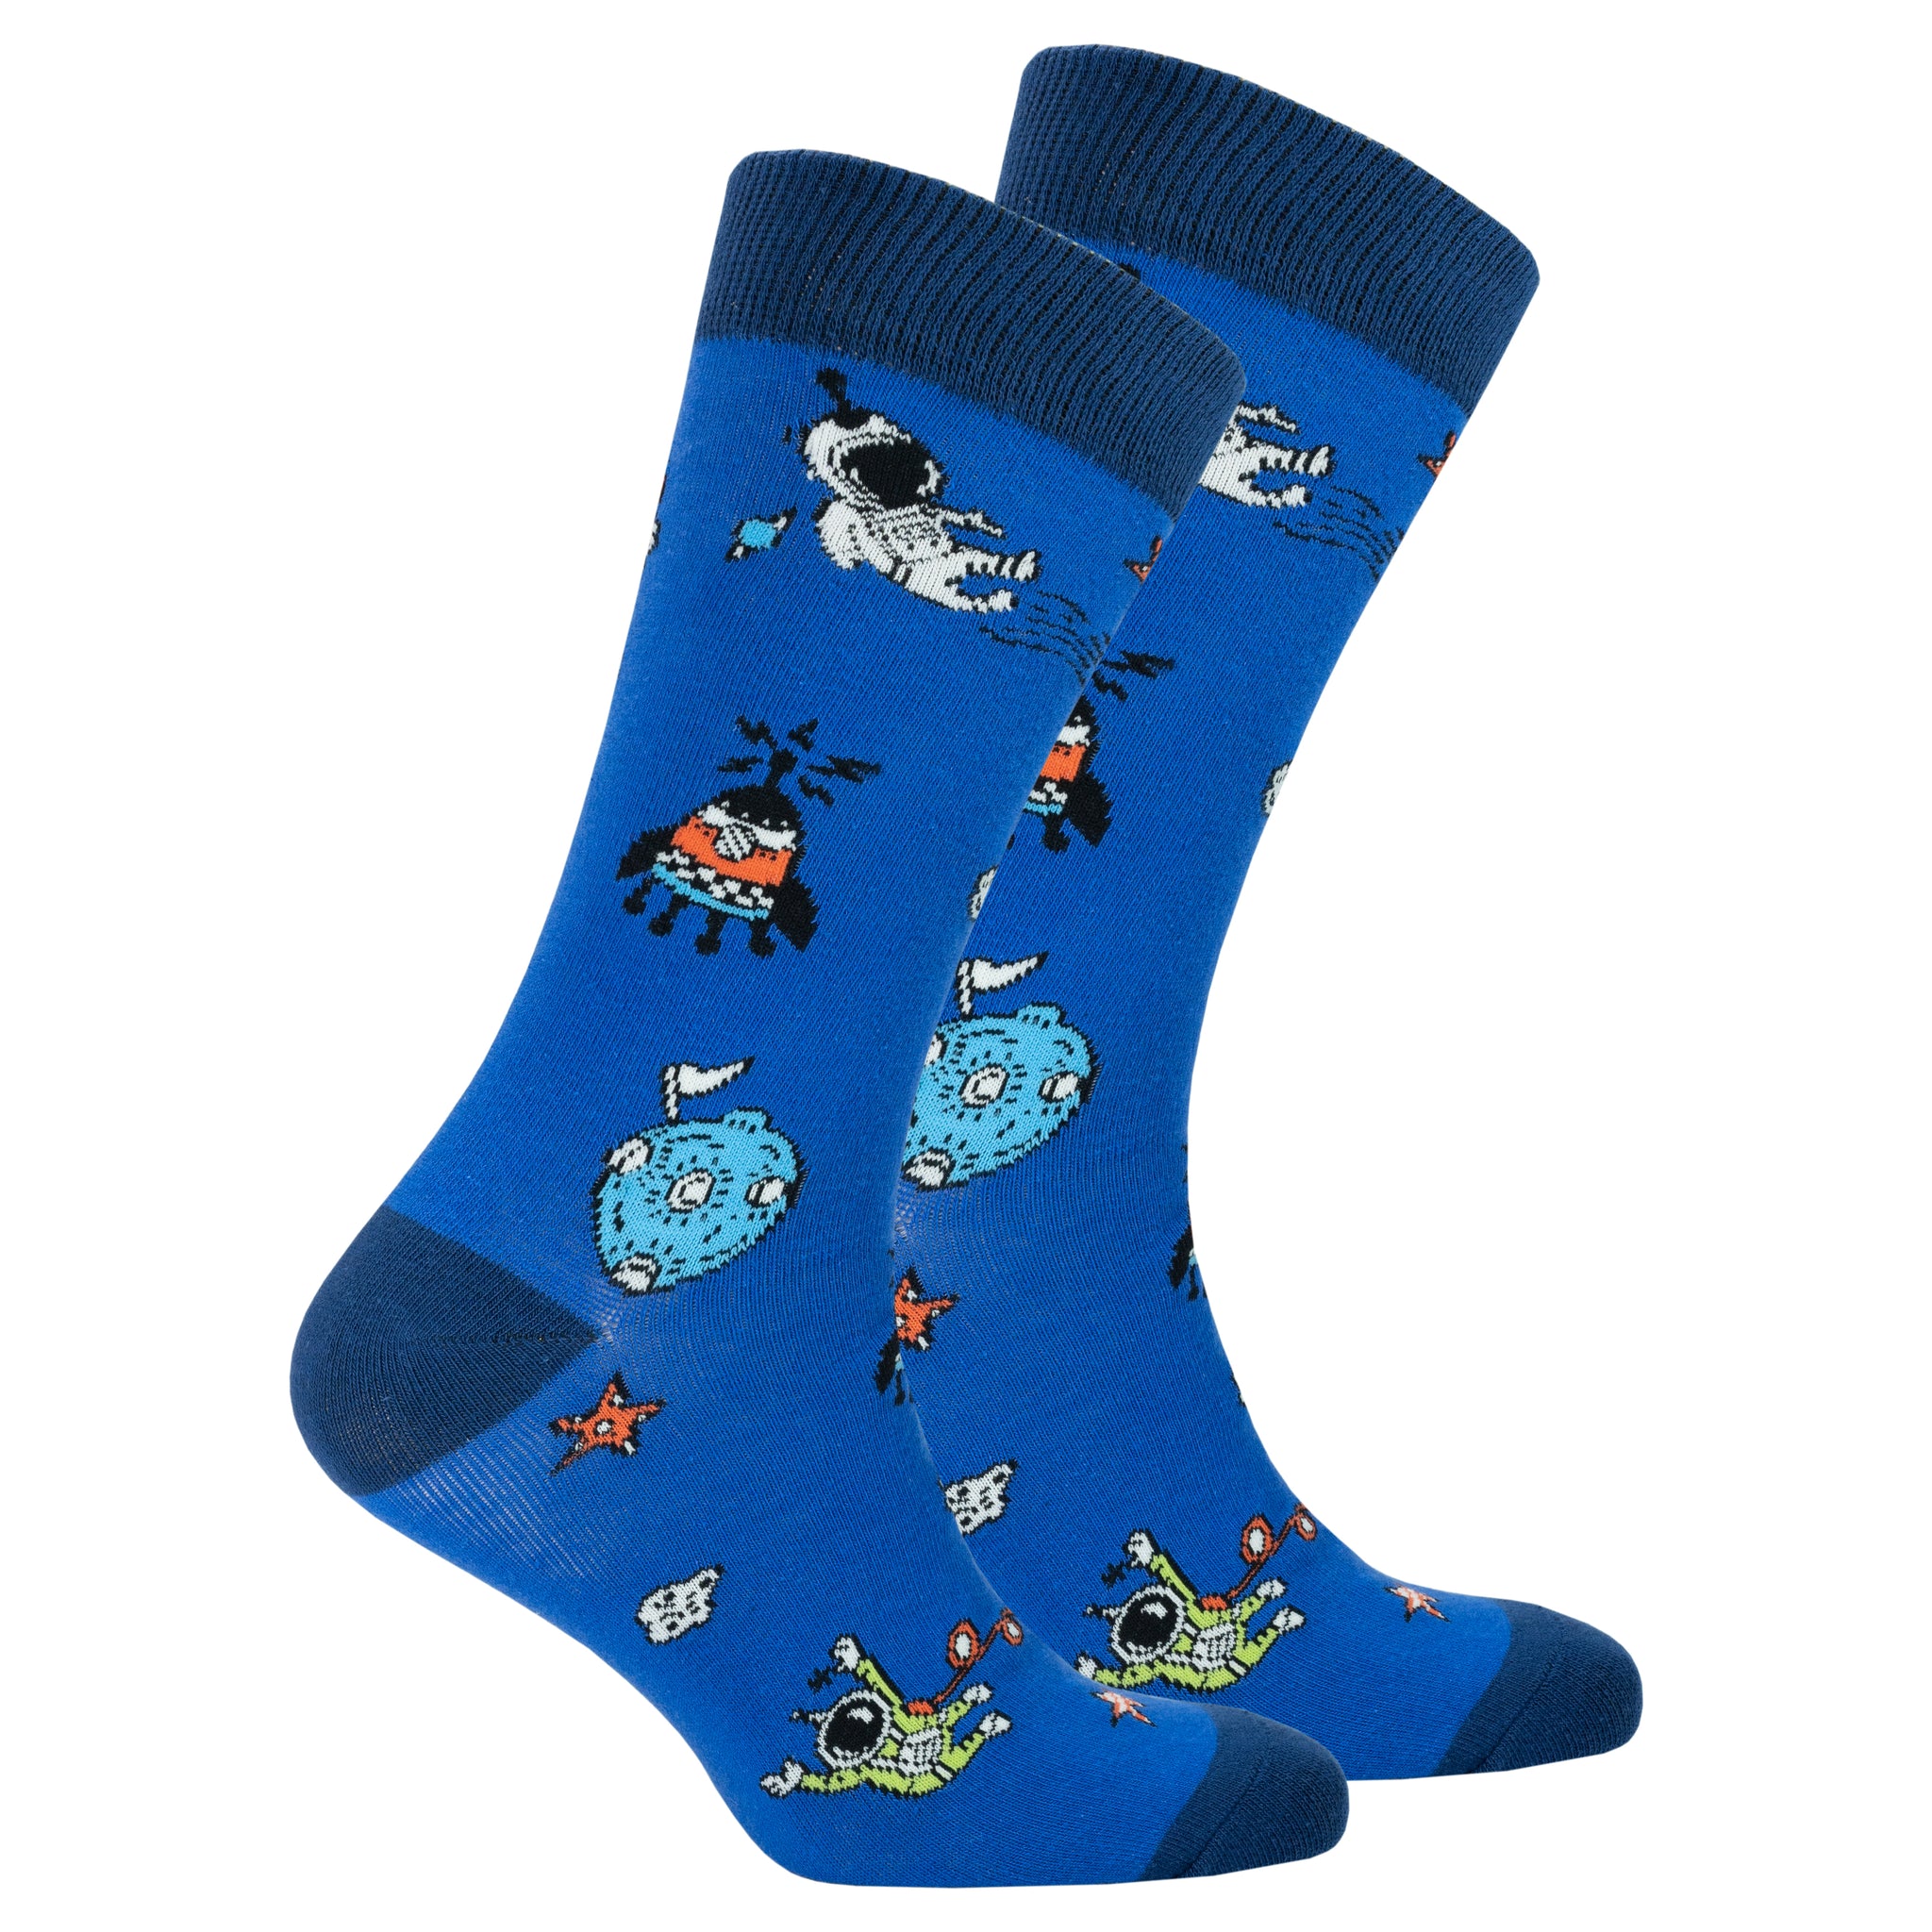 Men's Space Doodle Socks blue navy